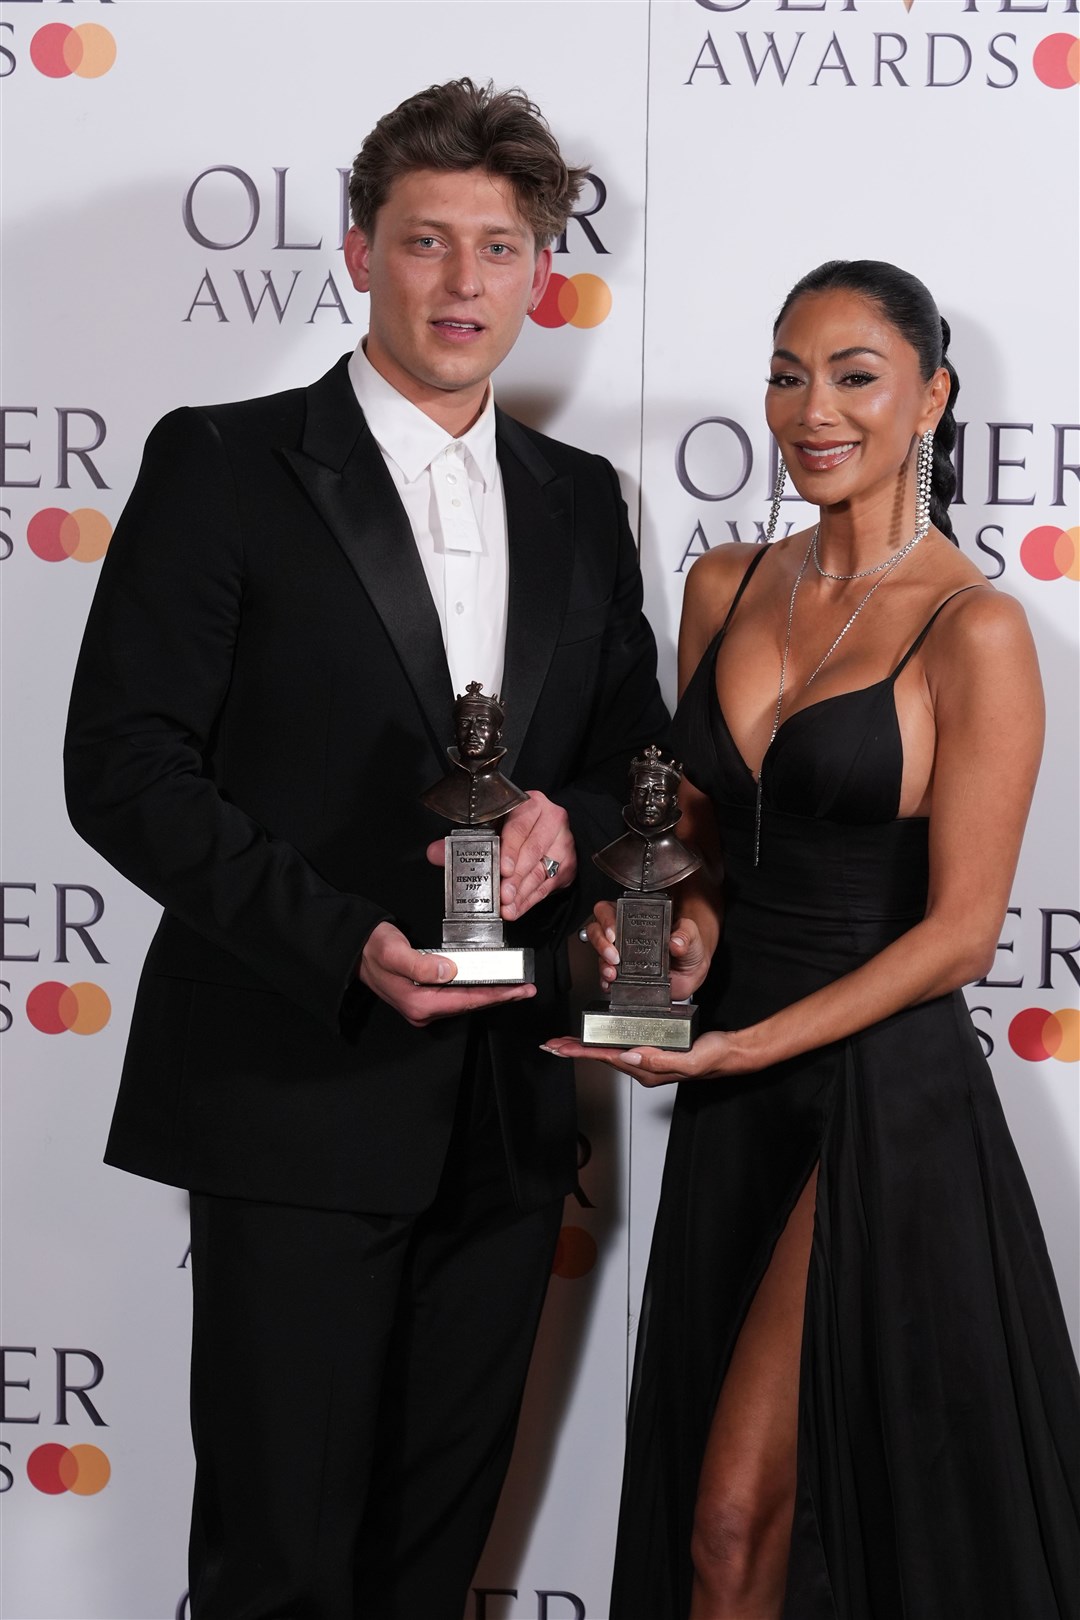 Tom Francis and Nicole Scherzinger with their awards (Ian West/PA)